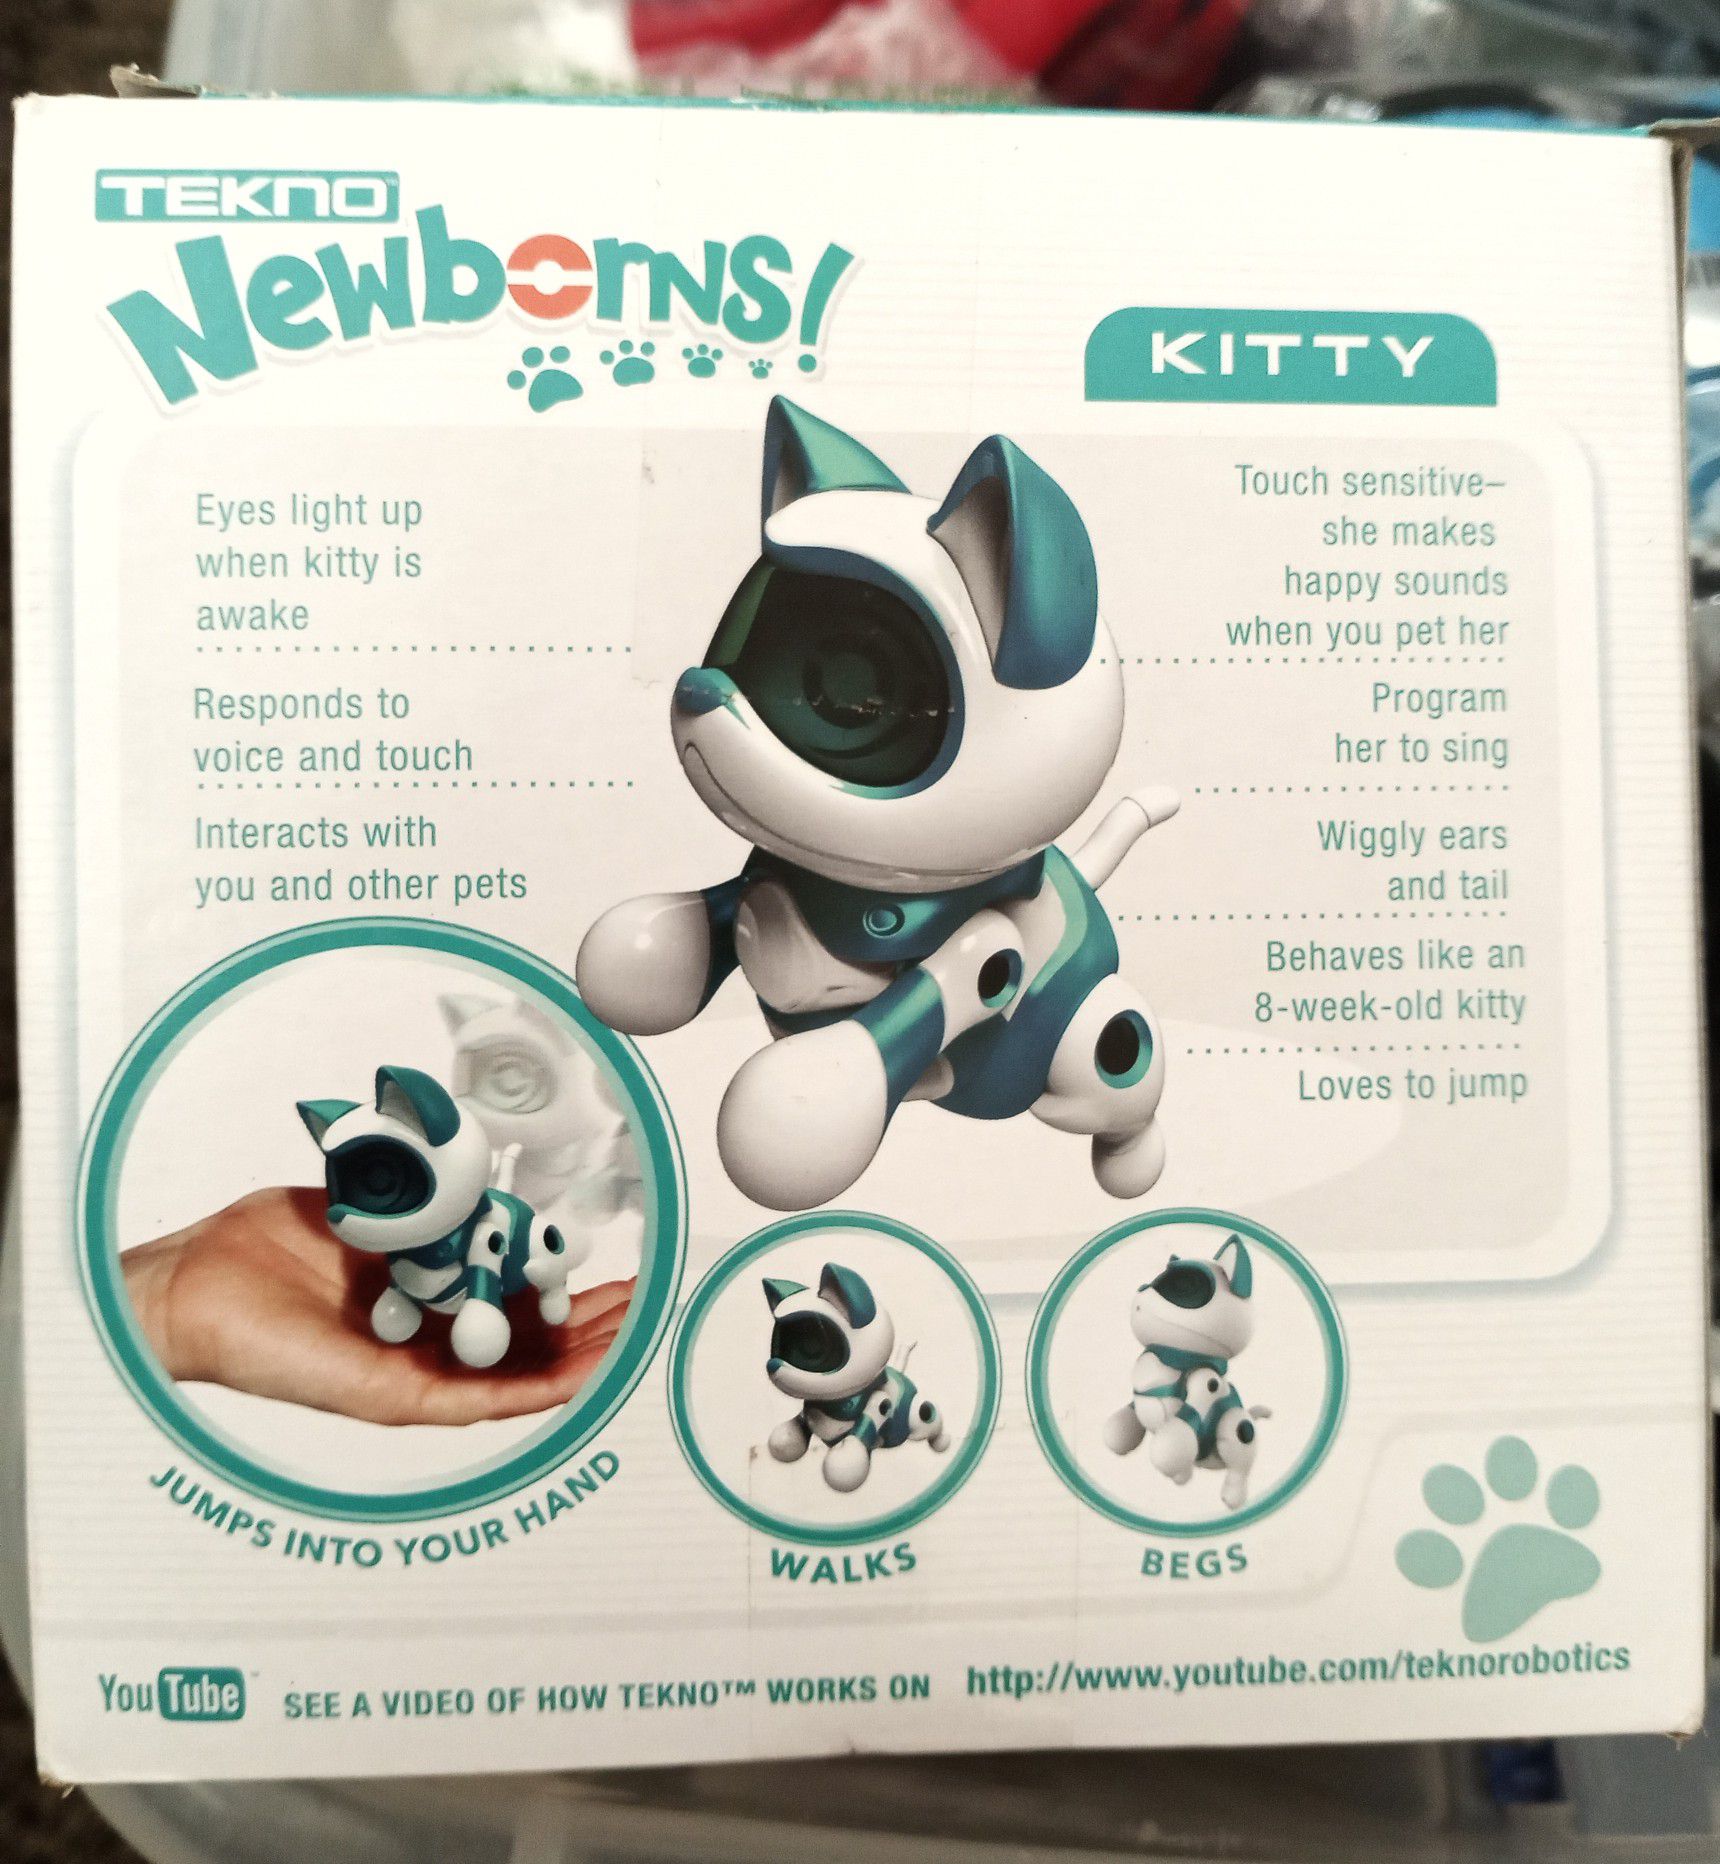 Tekno Newborns 45910 Robotic Pet Kitty, Teal